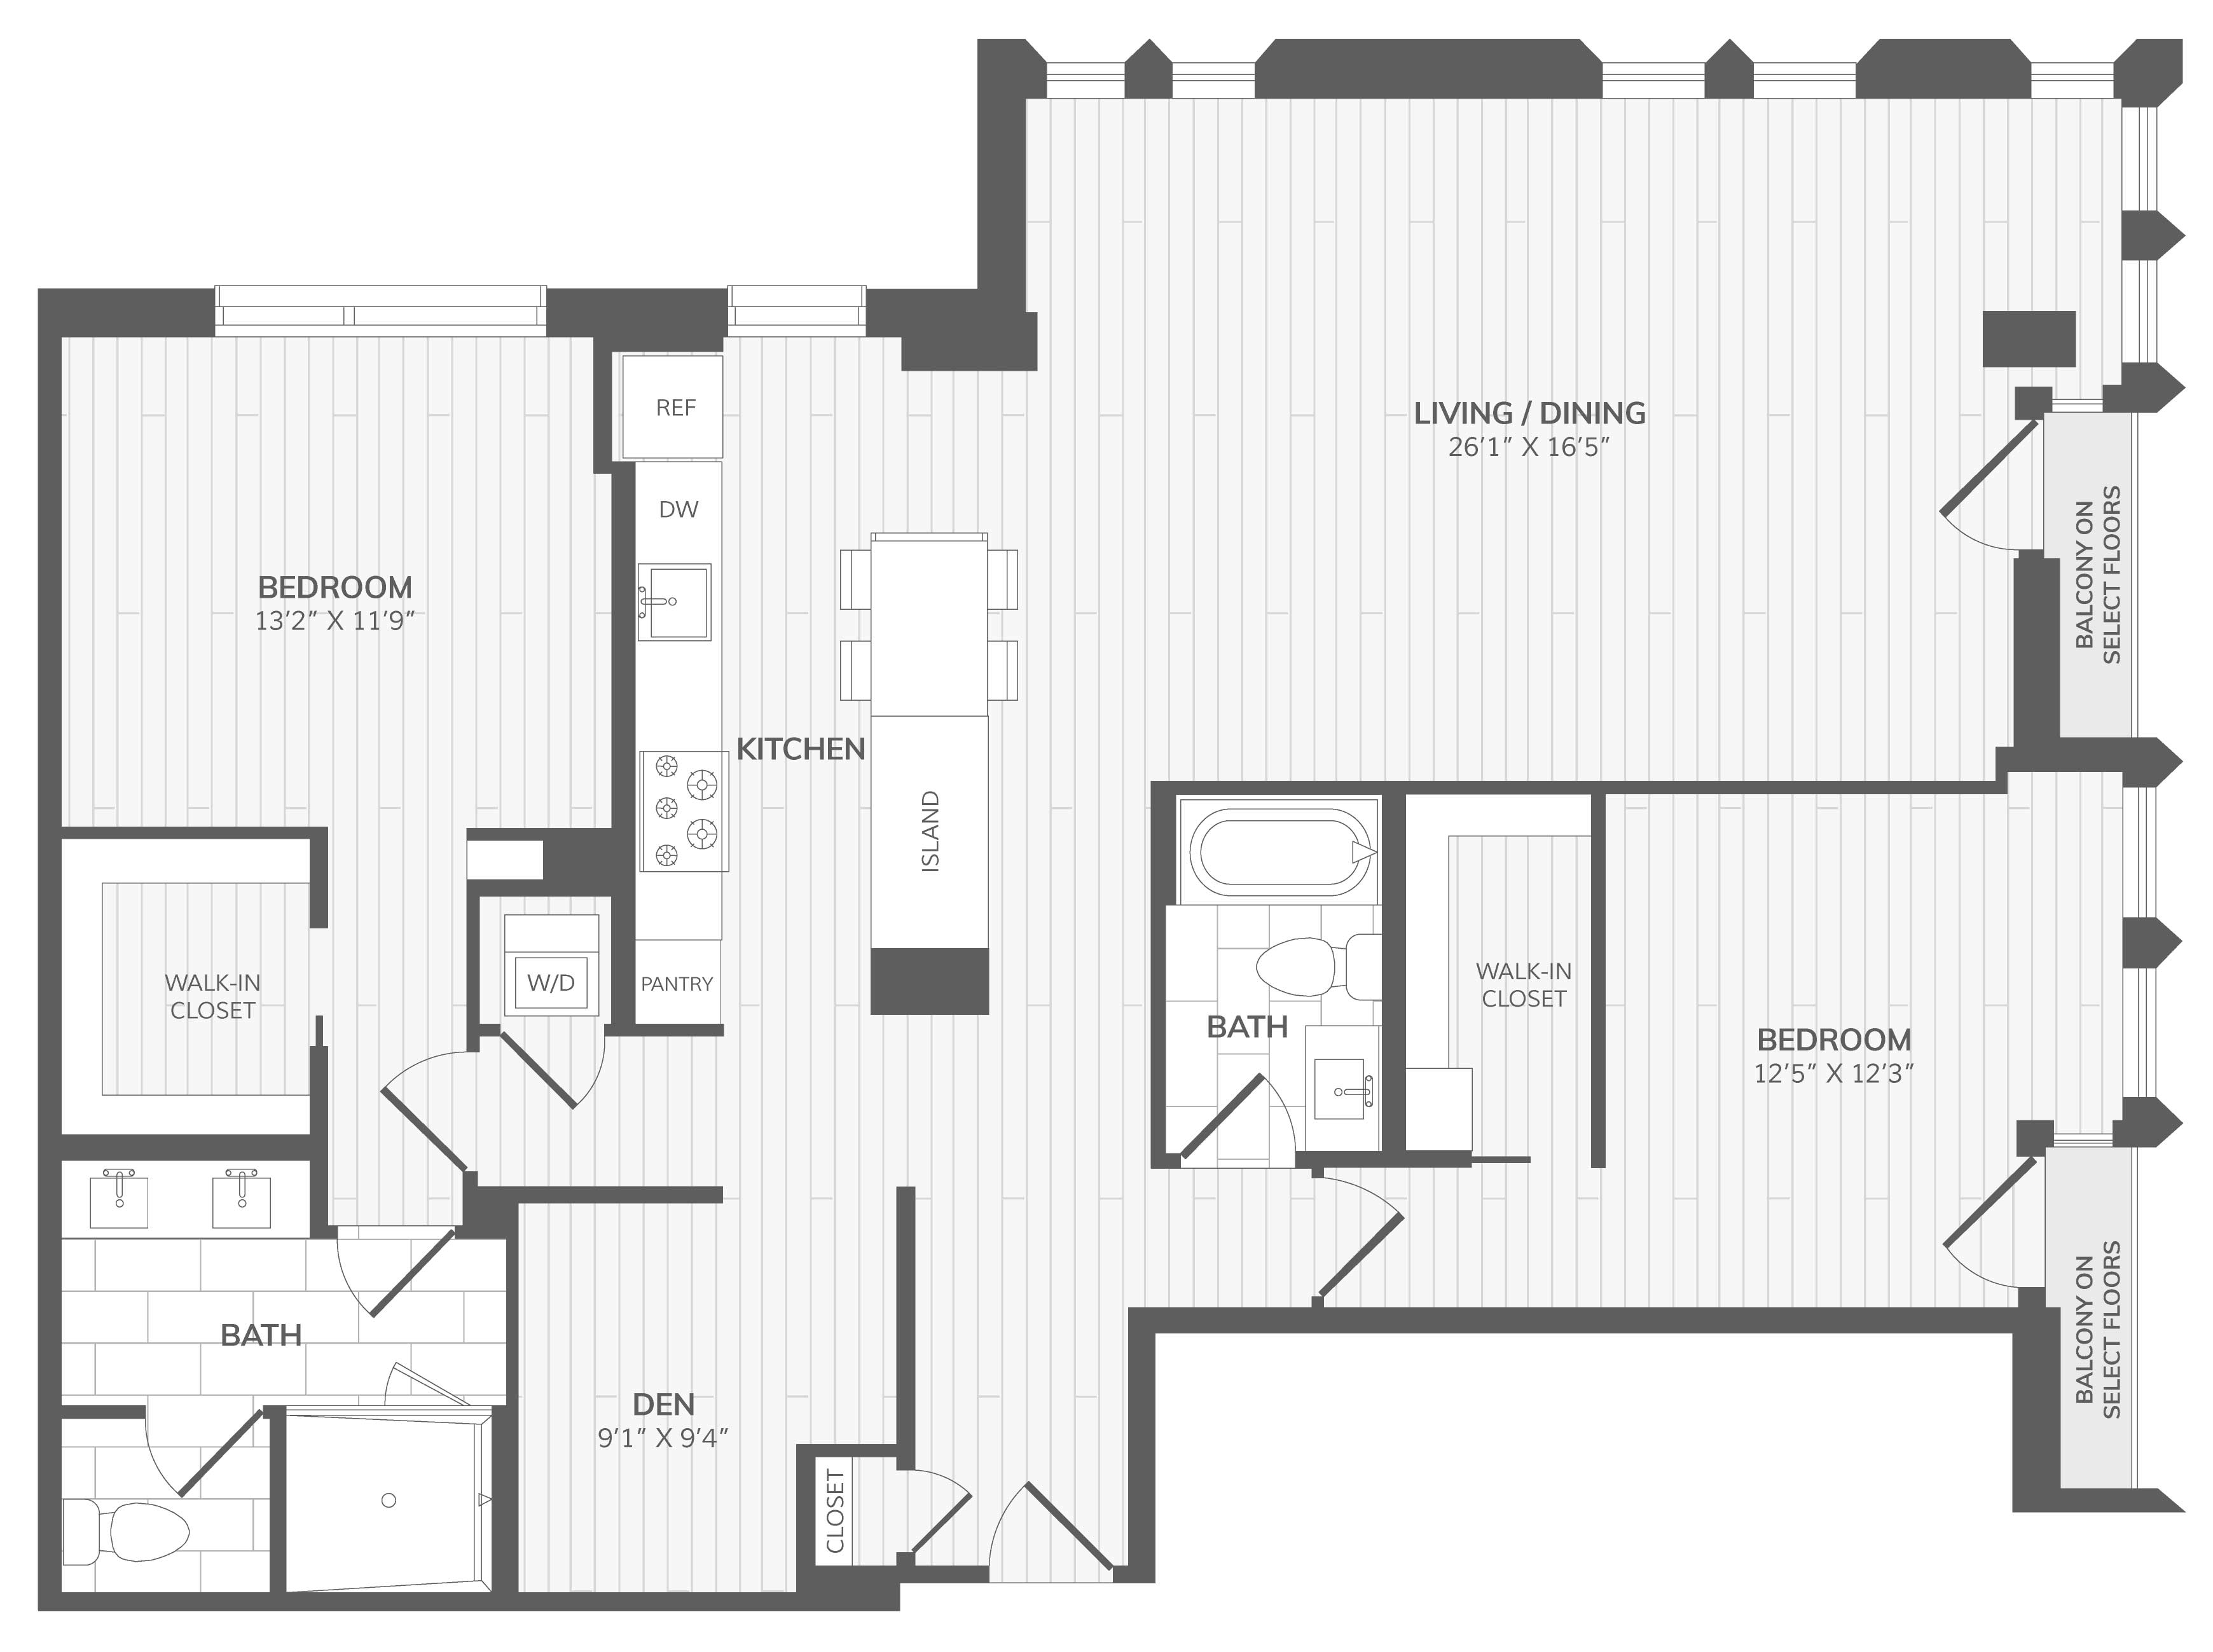 Floorplan Image of 0401